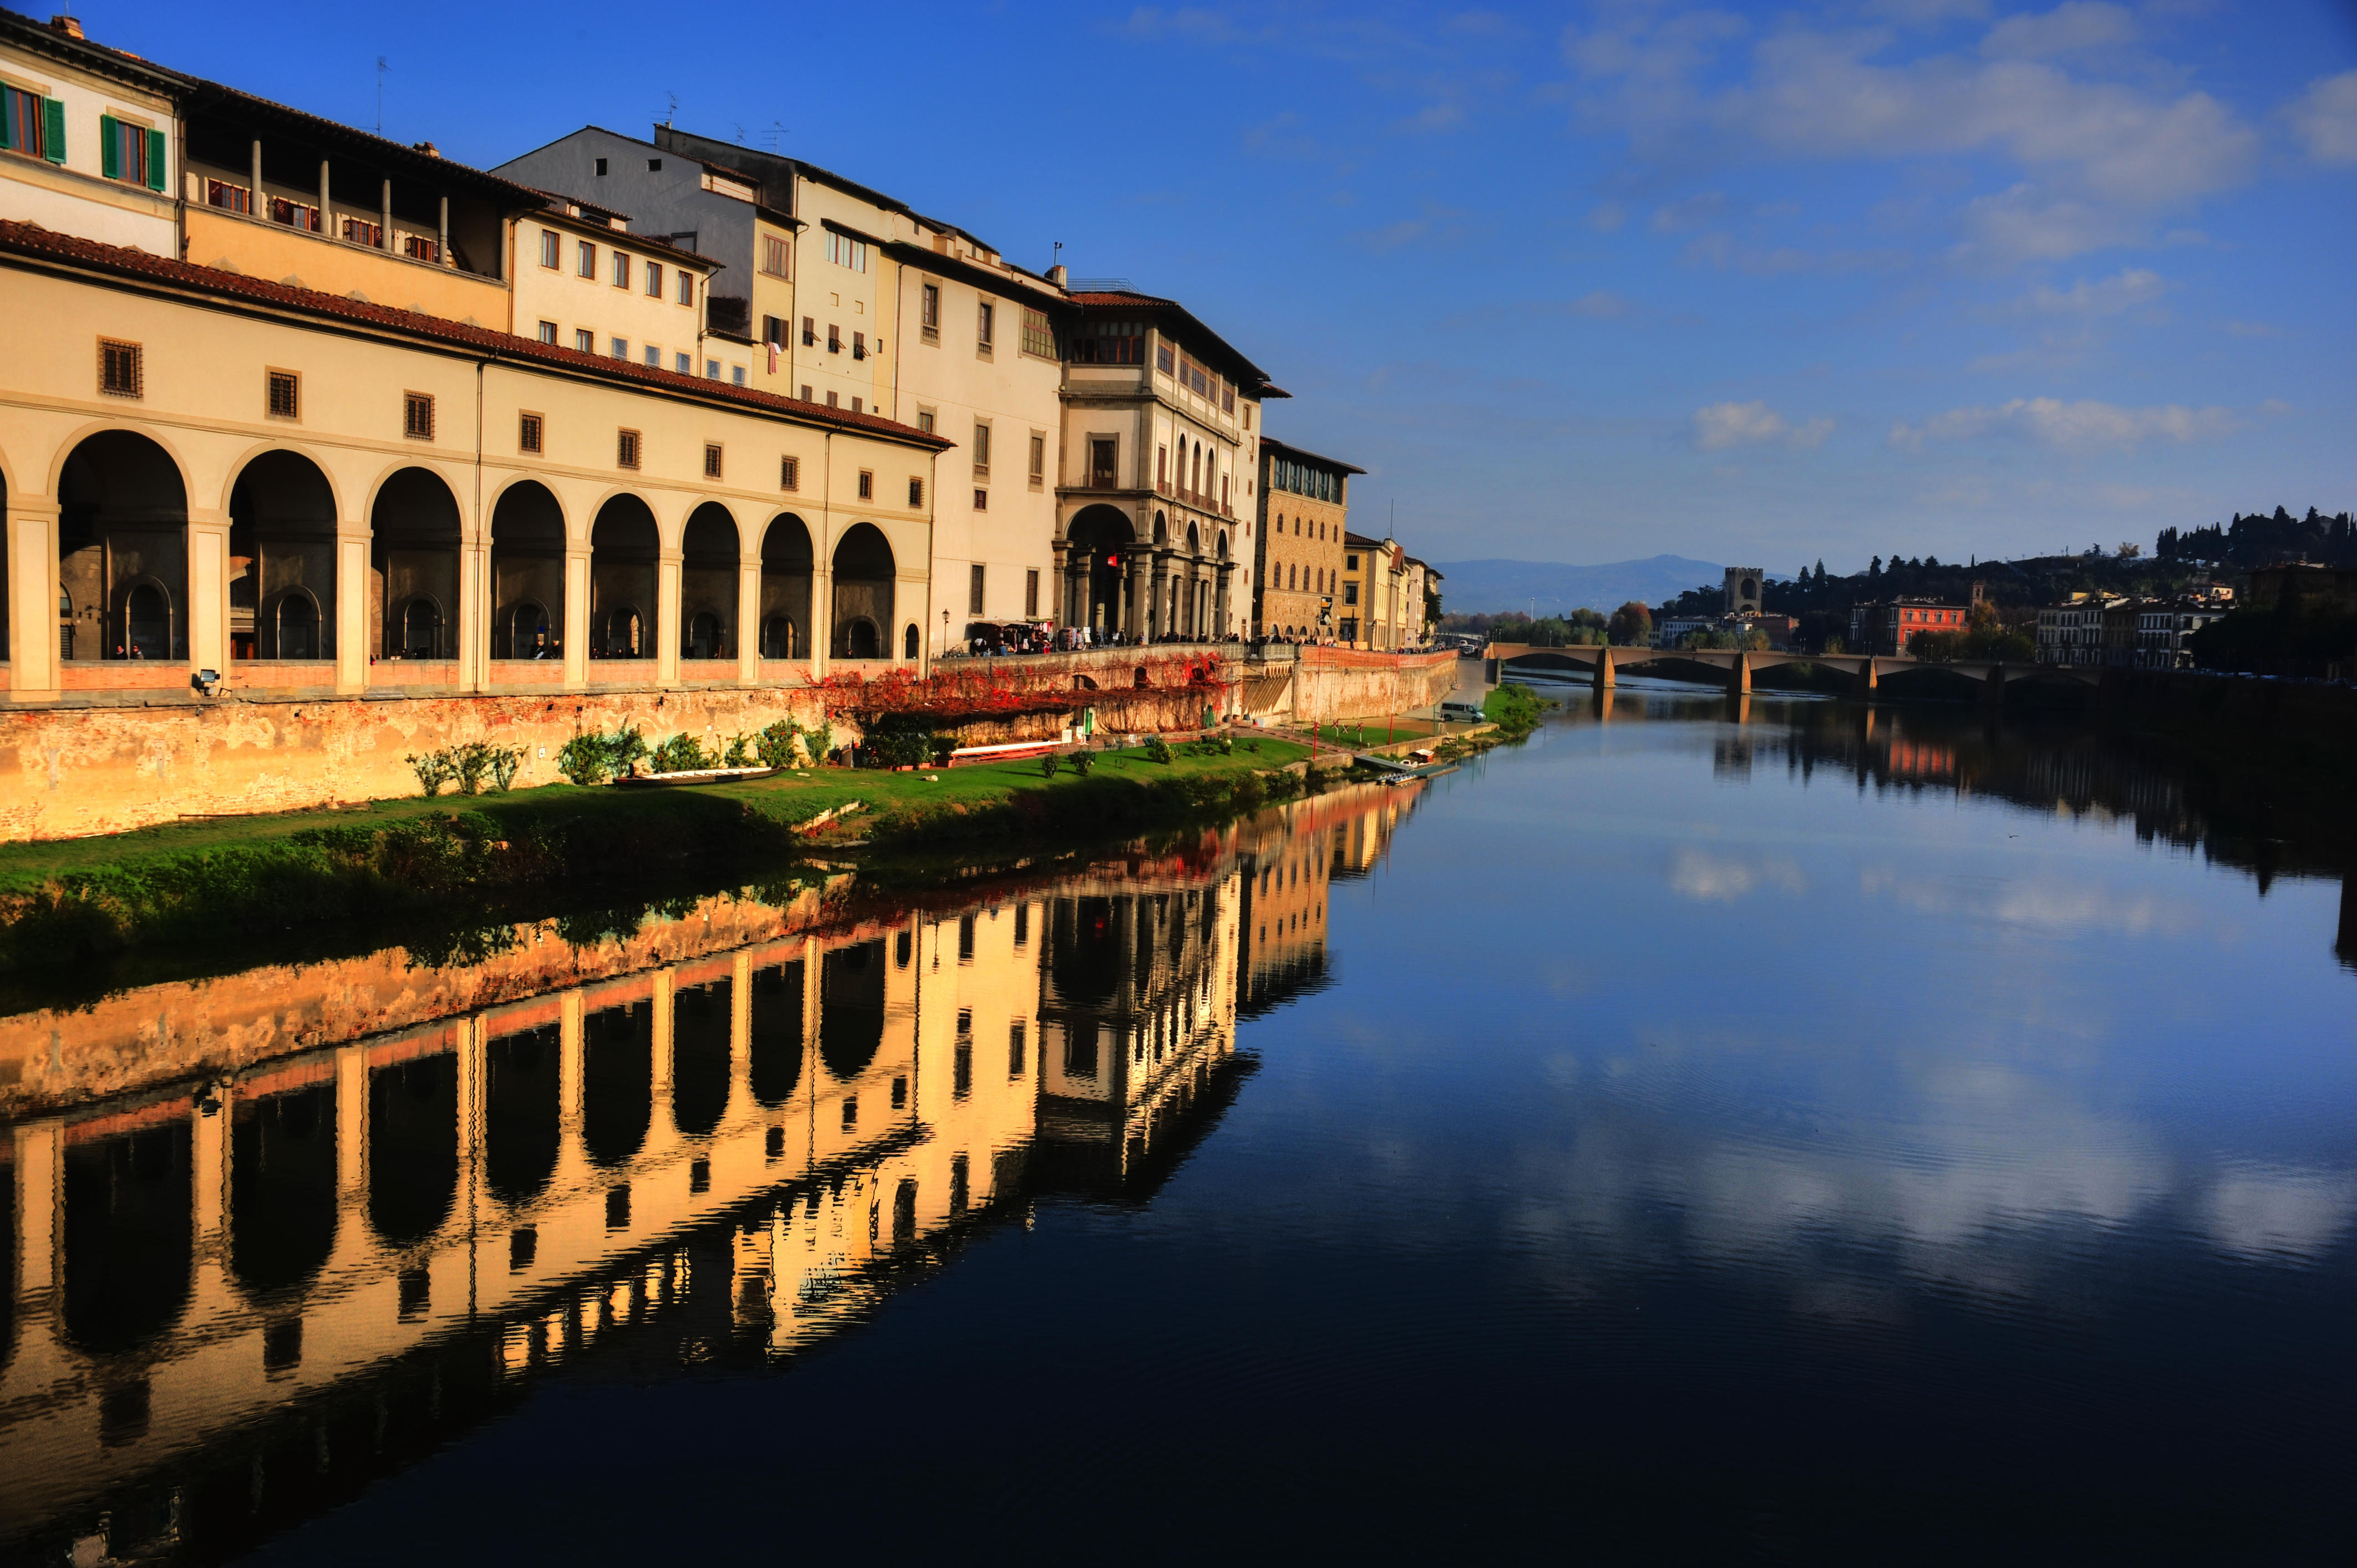 The Arno from the Ponte Vecchio